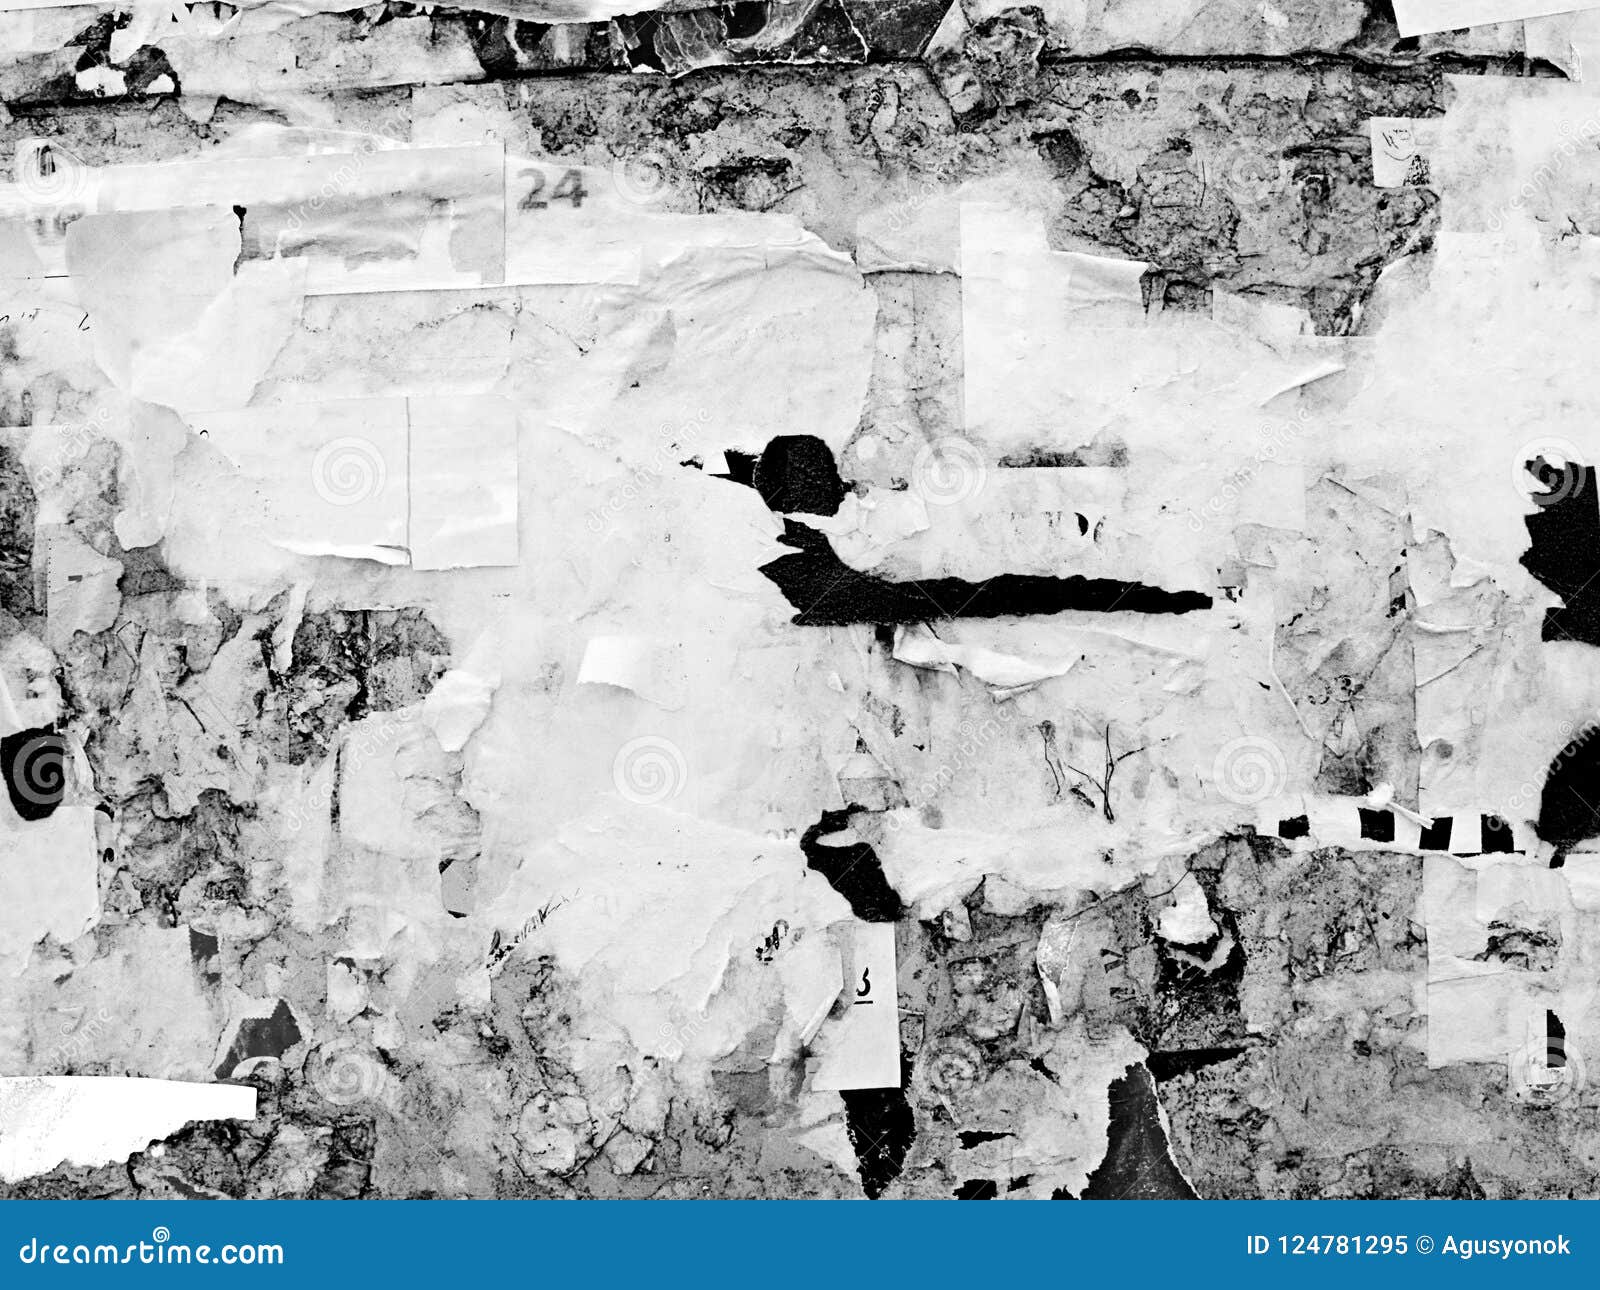 paper texture textured paper grunge public domain image - FreeIMG